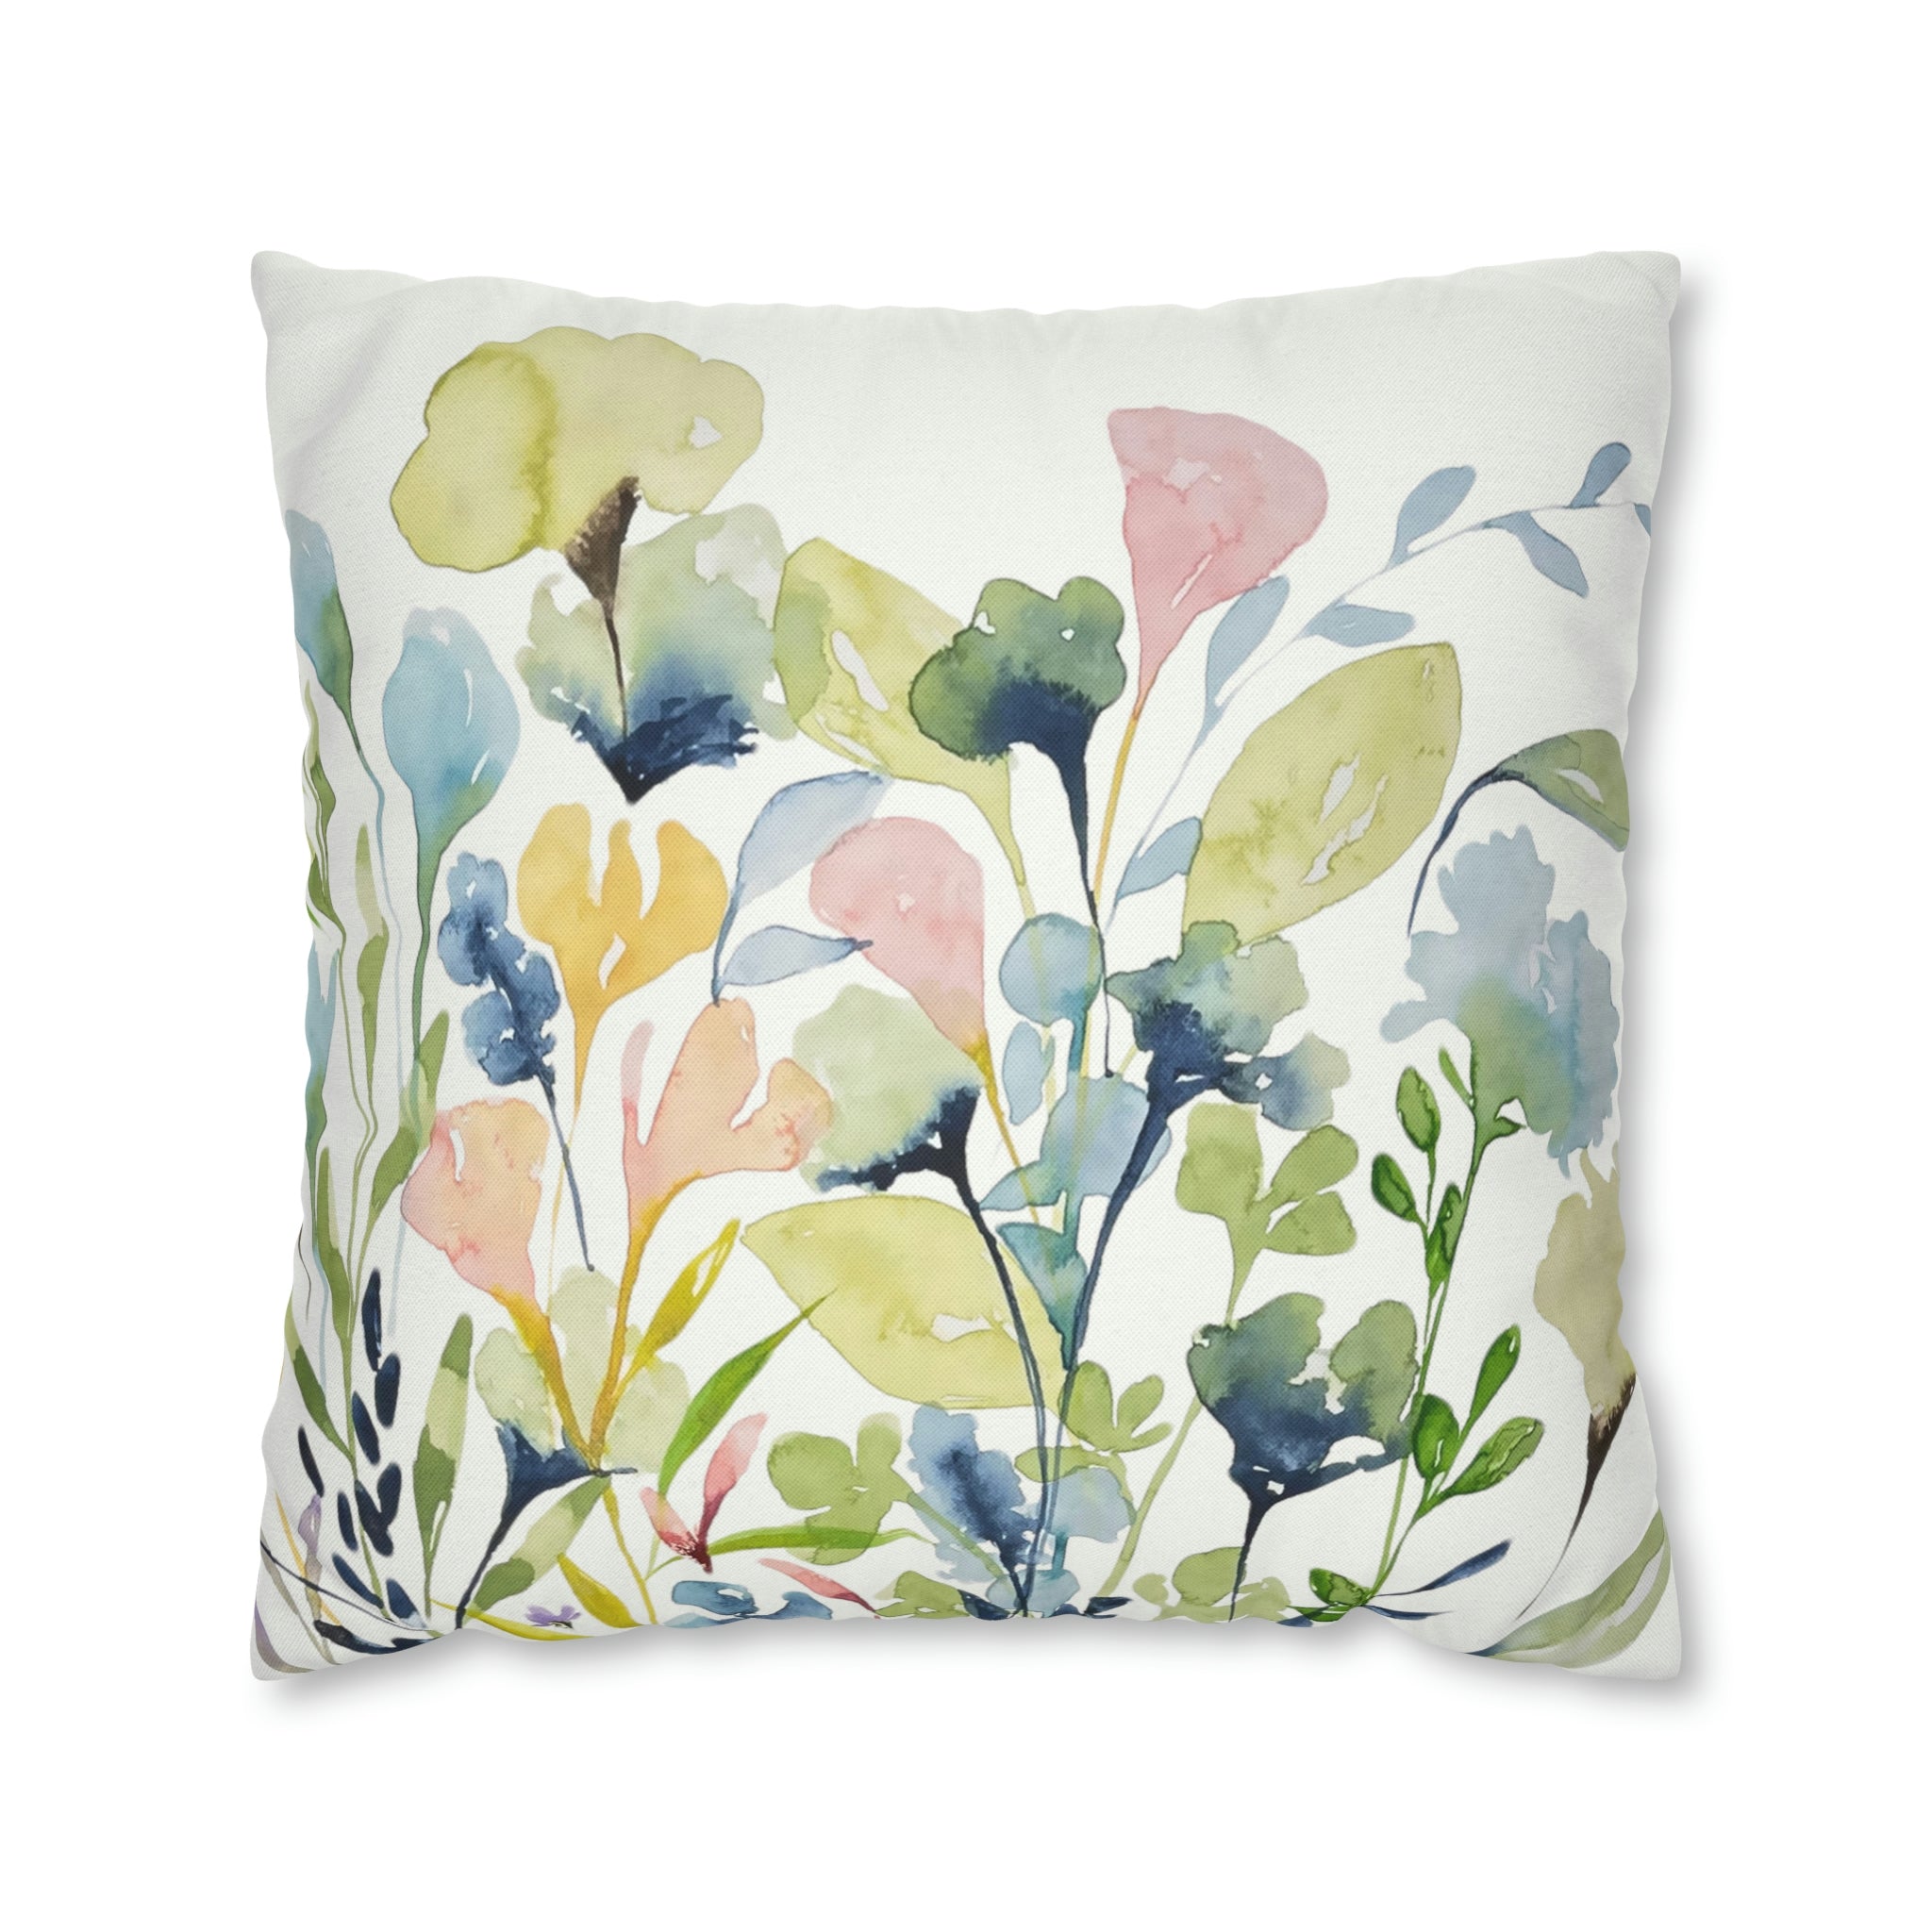 Prairie Wildflowers #2 Botanical Garden Print on Throw Pillow Cover